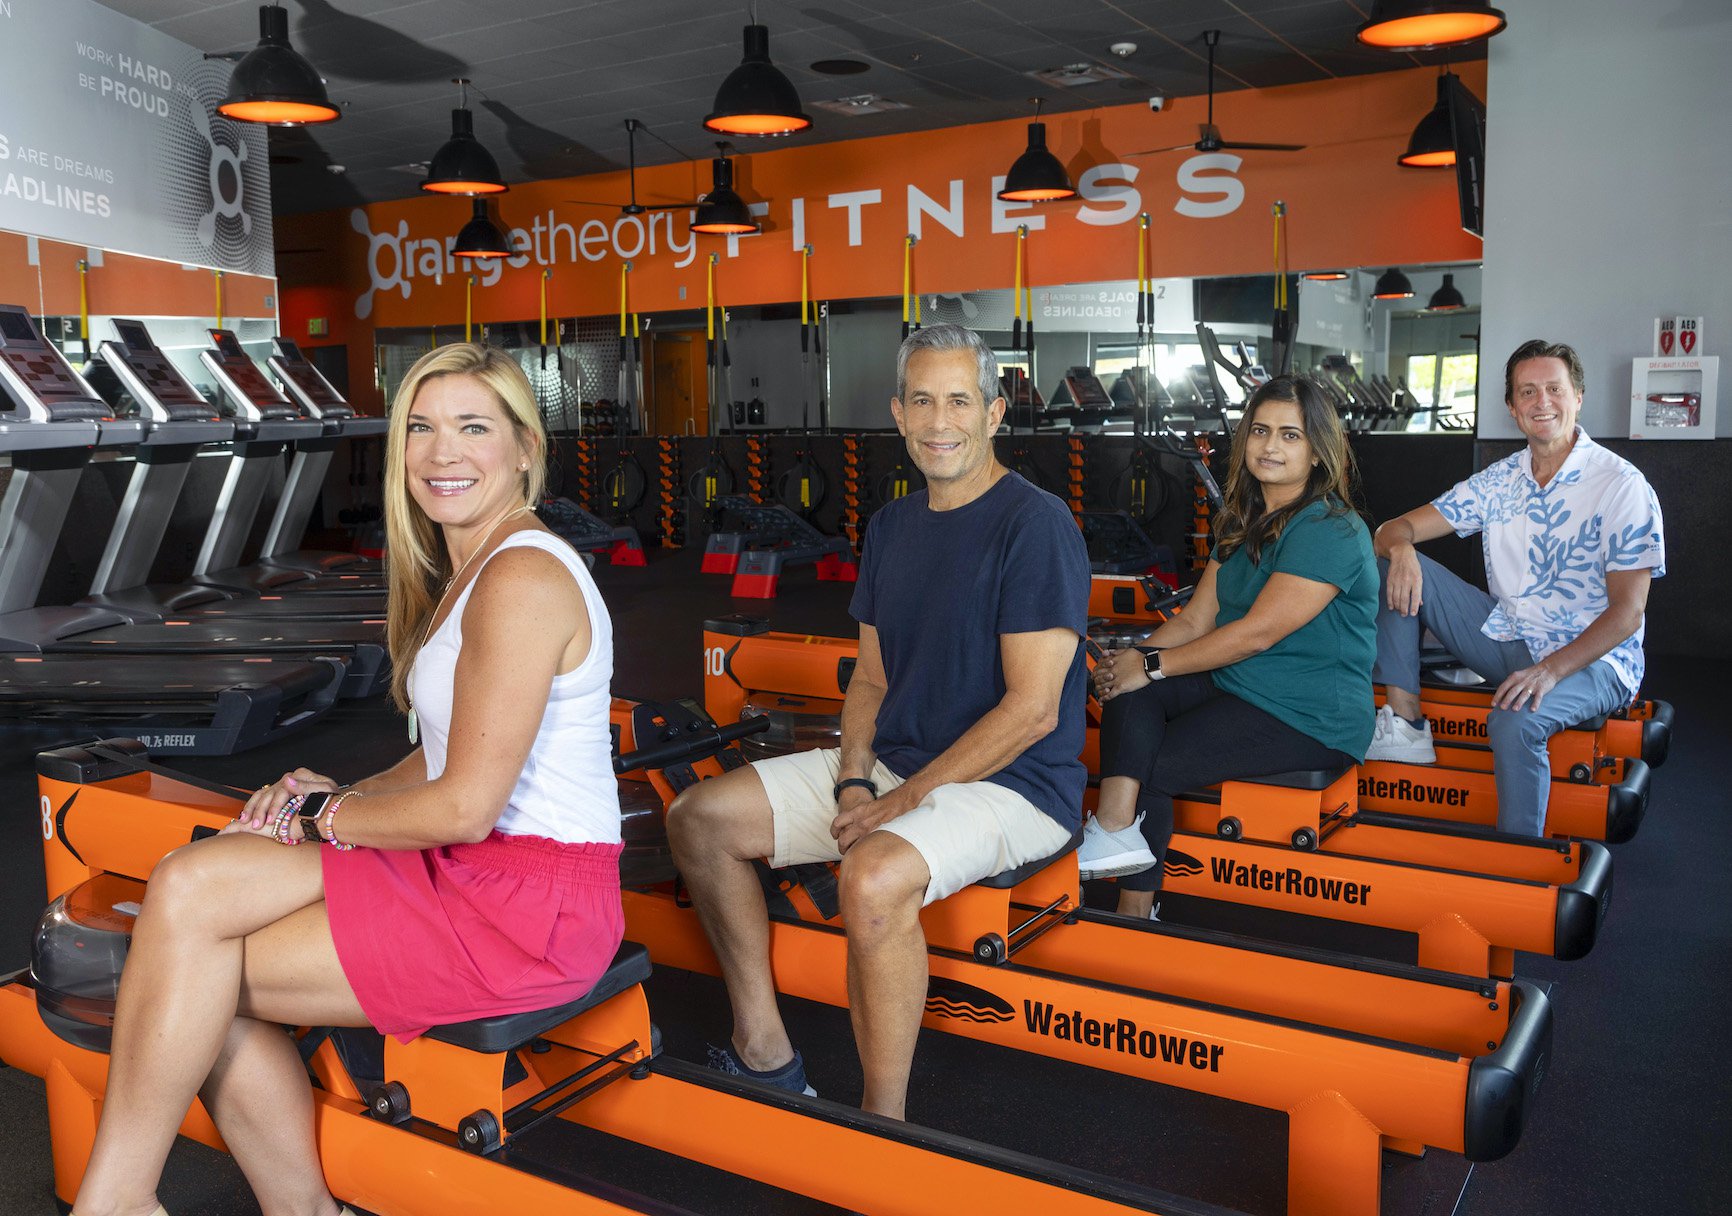 Orangetheory Fitness Creates Community Through Fitness And